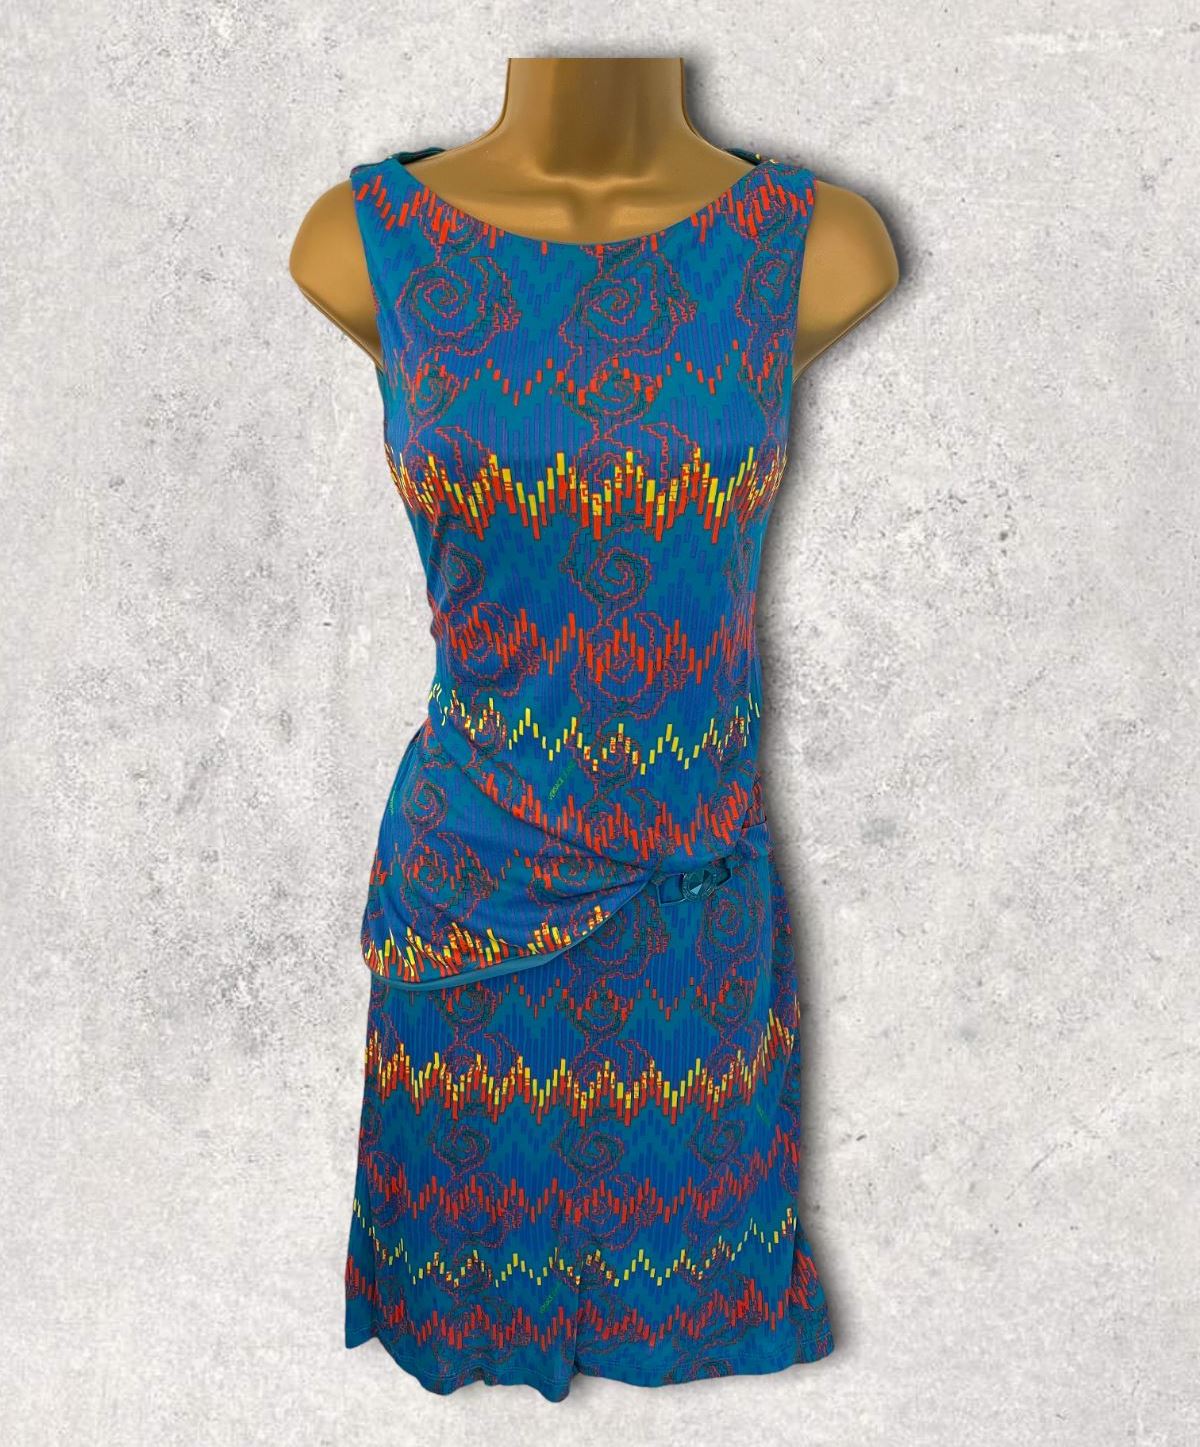 Versace Jeans Womens Turquoise Geometric Print Silky Mini Dress UK 8 US 4 EU 36 IT 40 Timeless Fashions